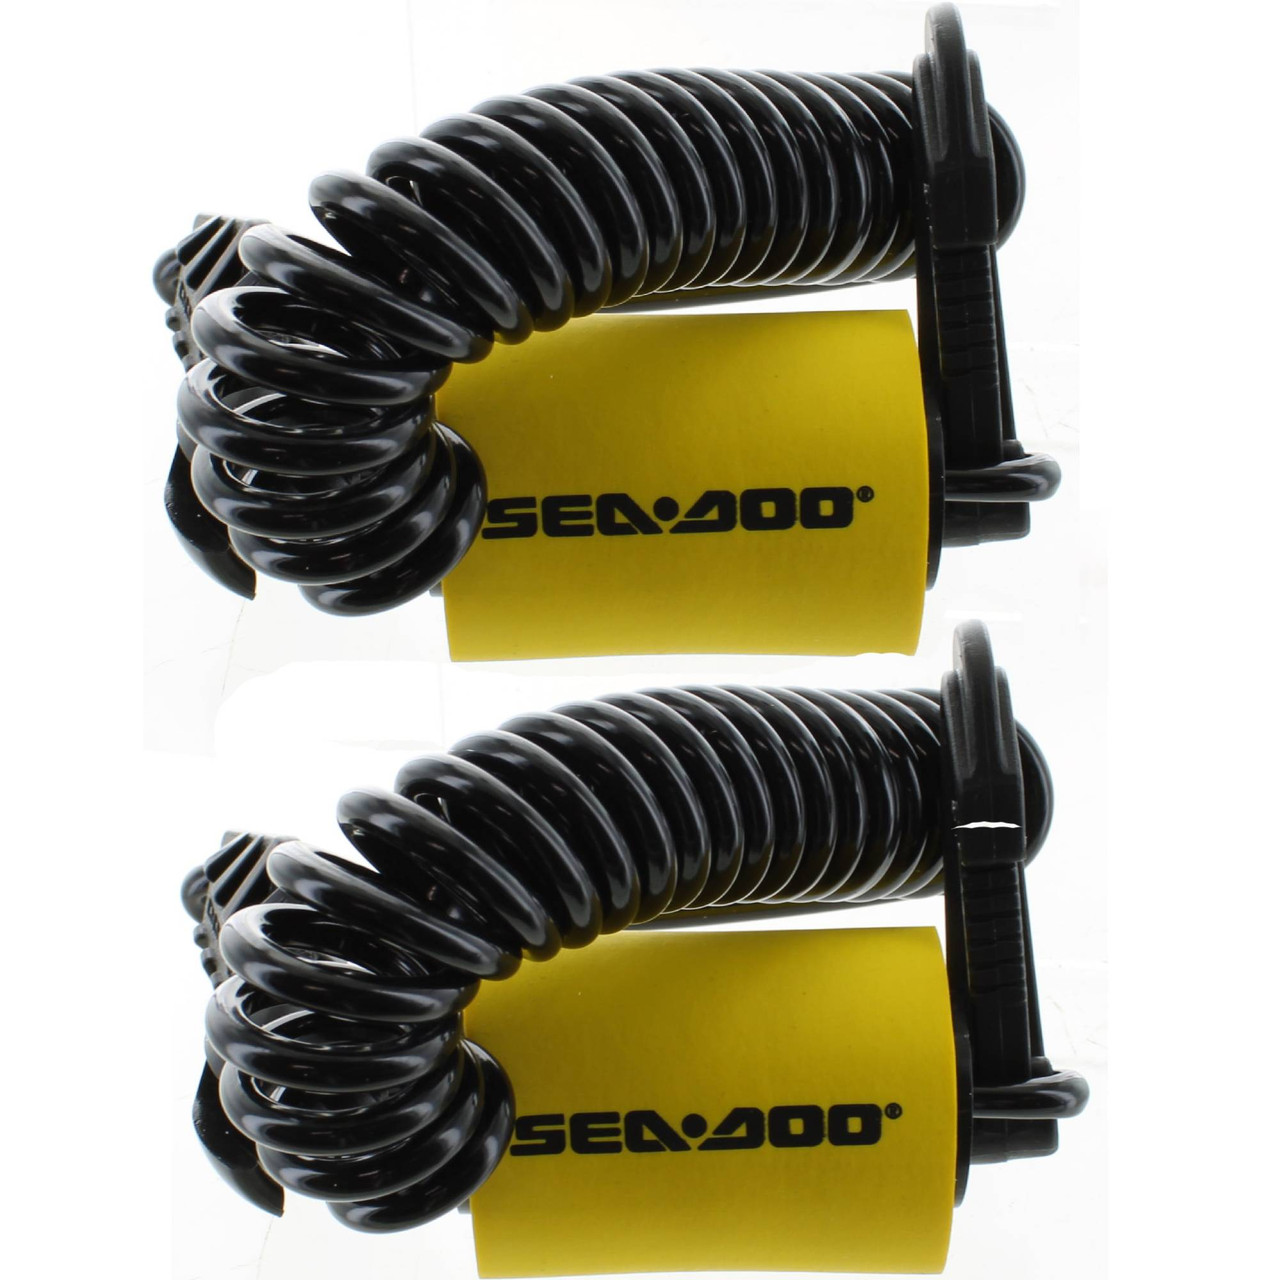 Sea-Doo New OEM 2/PK Safety Lanyard Key Cord & Clip, 278002843, 278003410